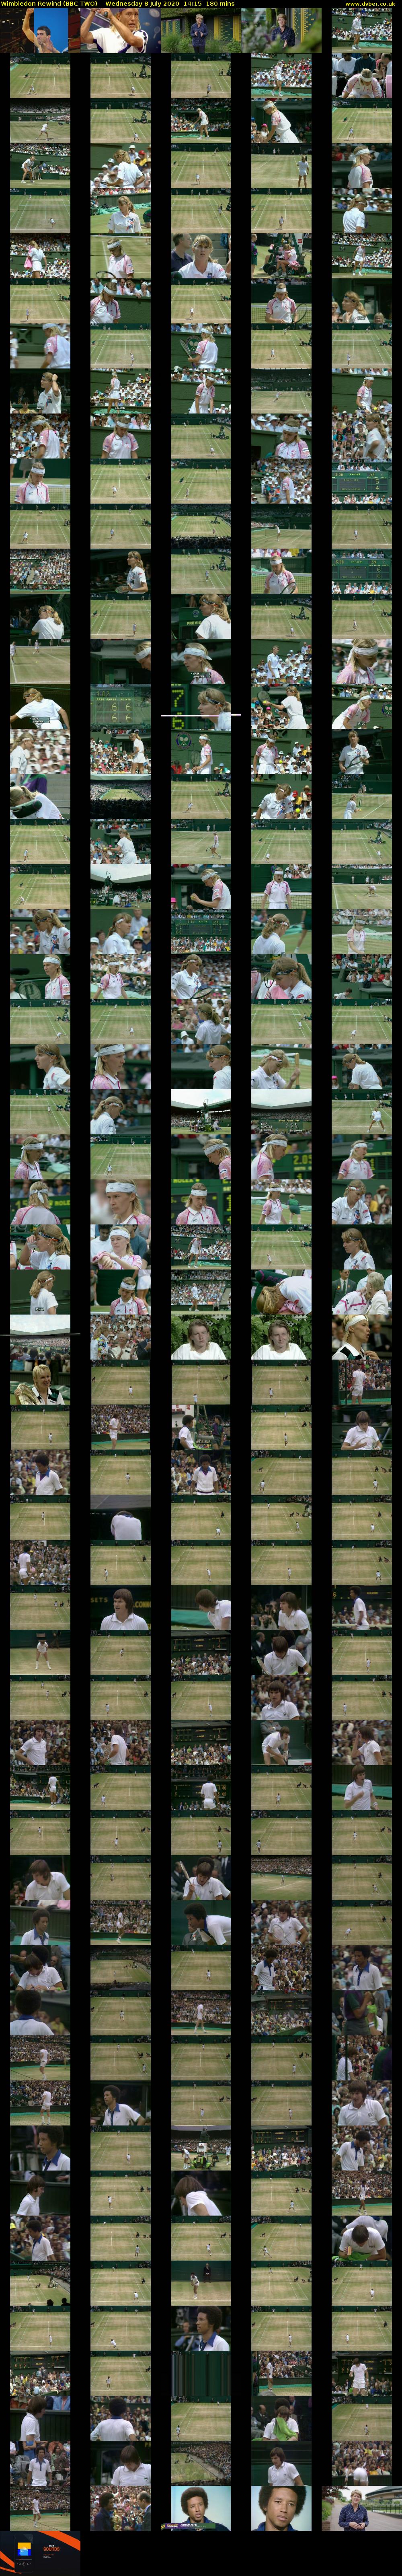 Wimbledon Rewind (BBC TWO) Wednesday 8 July 2020 14:15 - 17:15